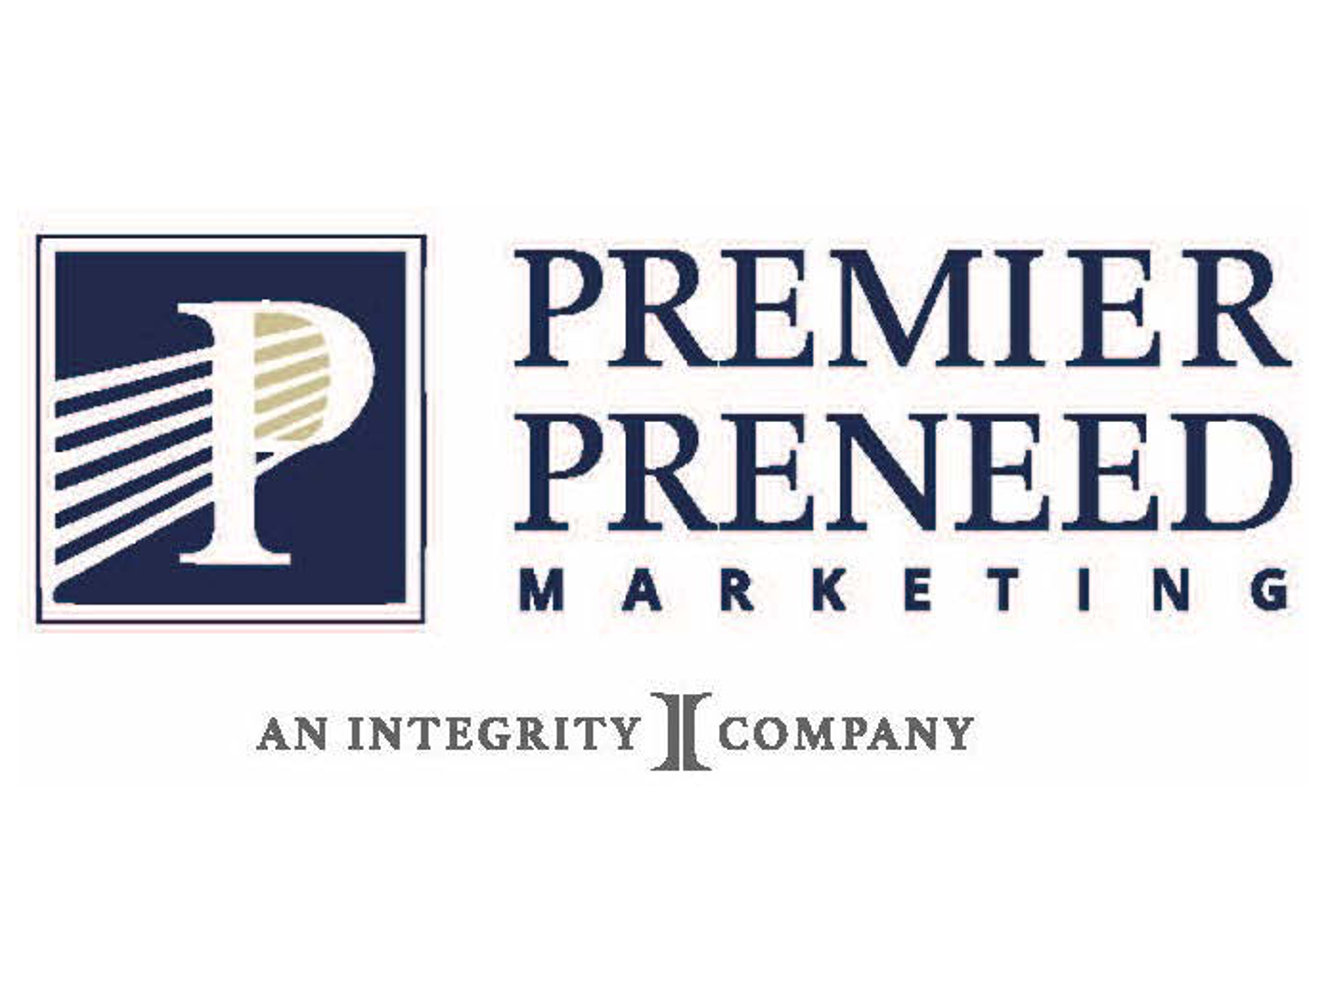 Premier Preneed Marketing